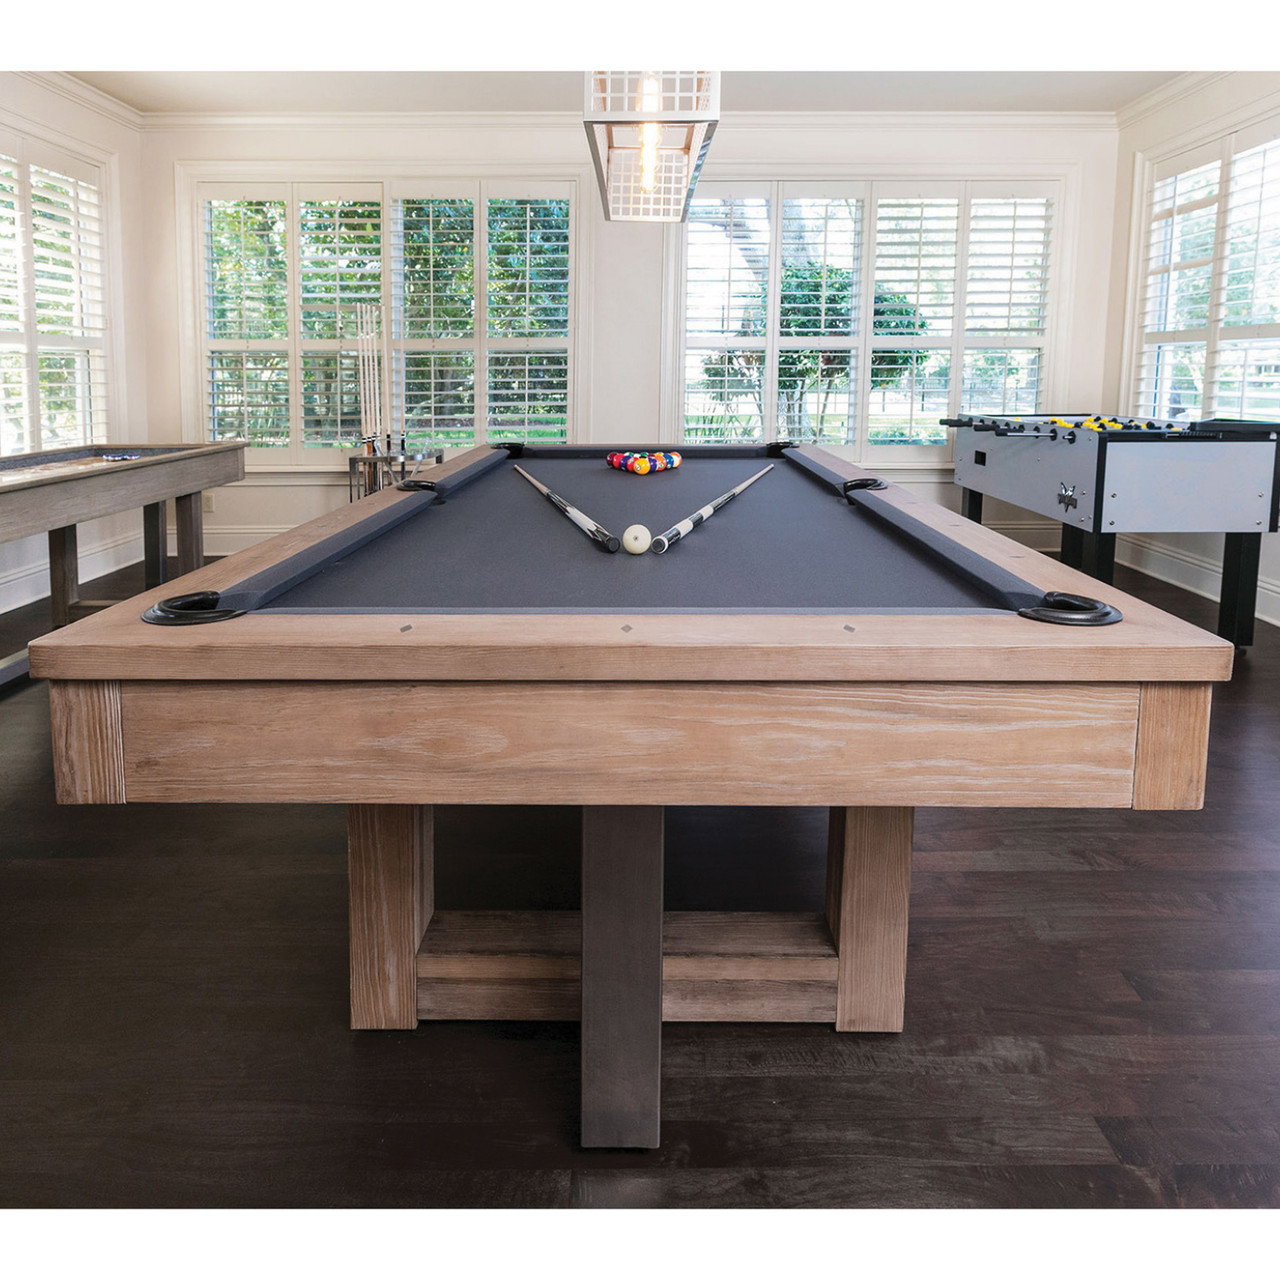 Abbey 8' Billiard Table - Gray